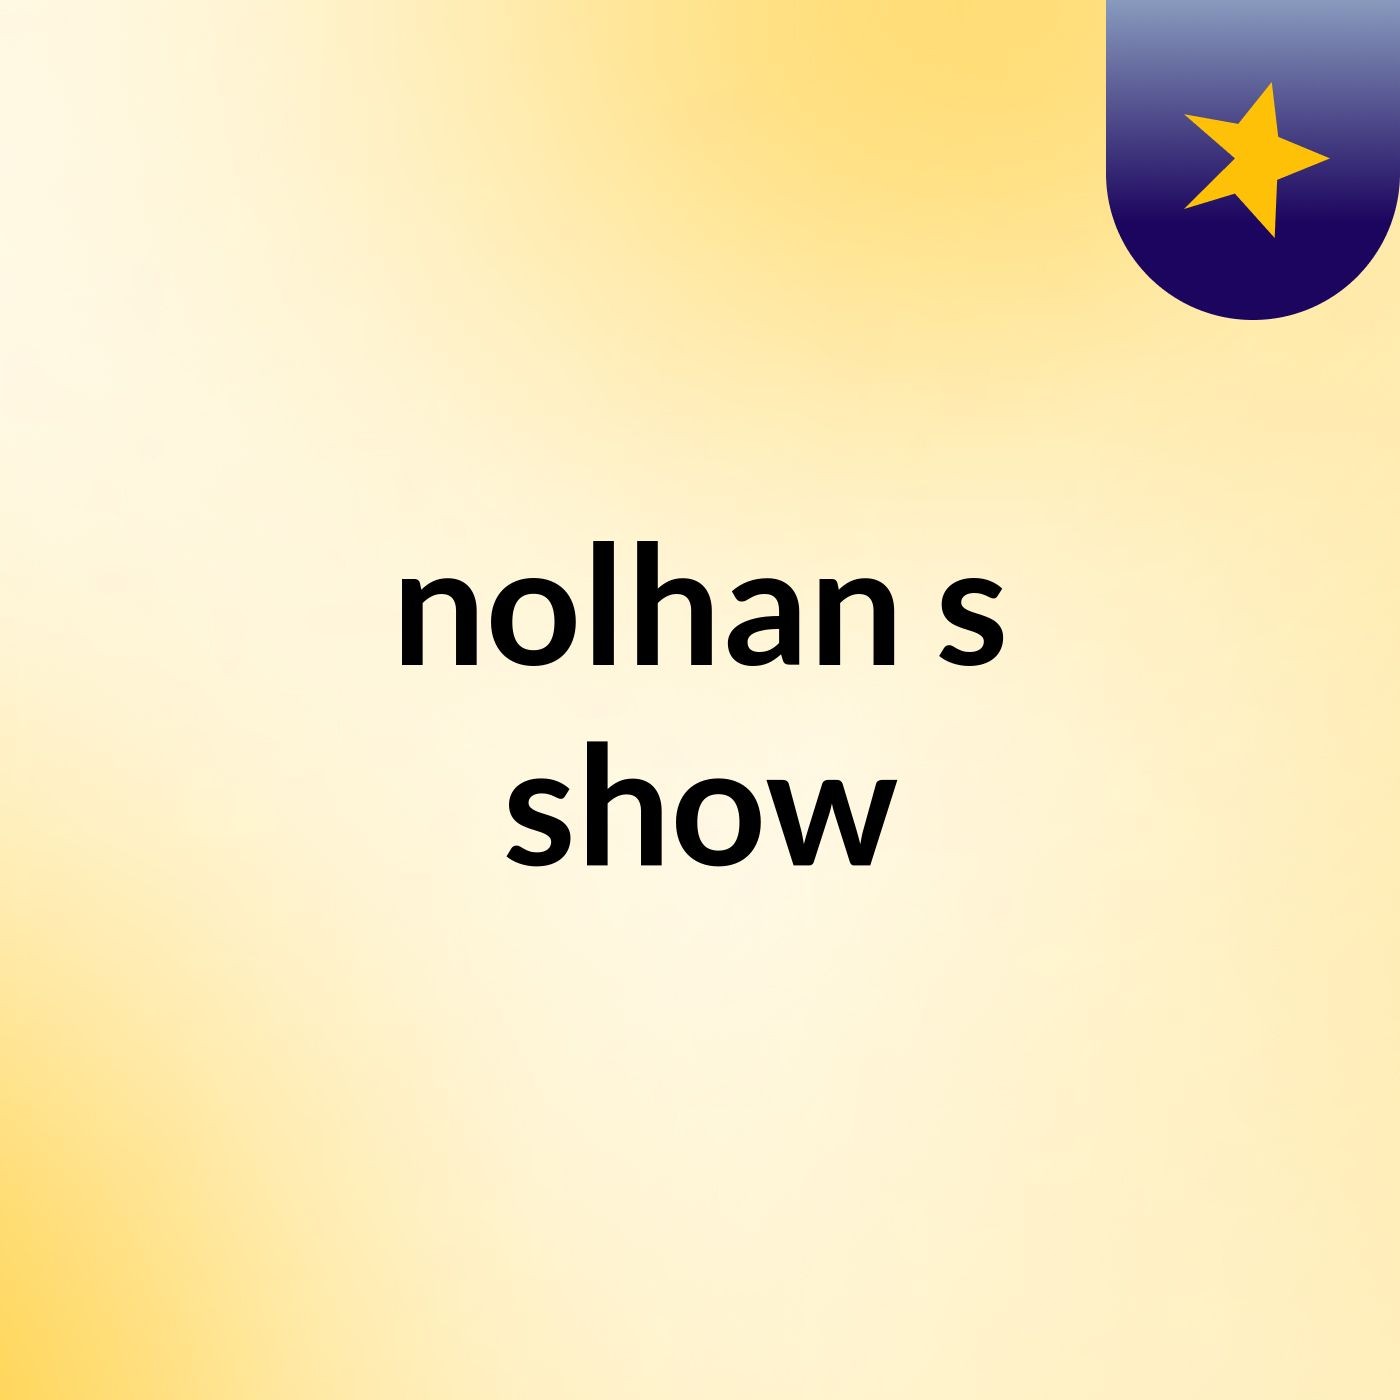 nolhan's show